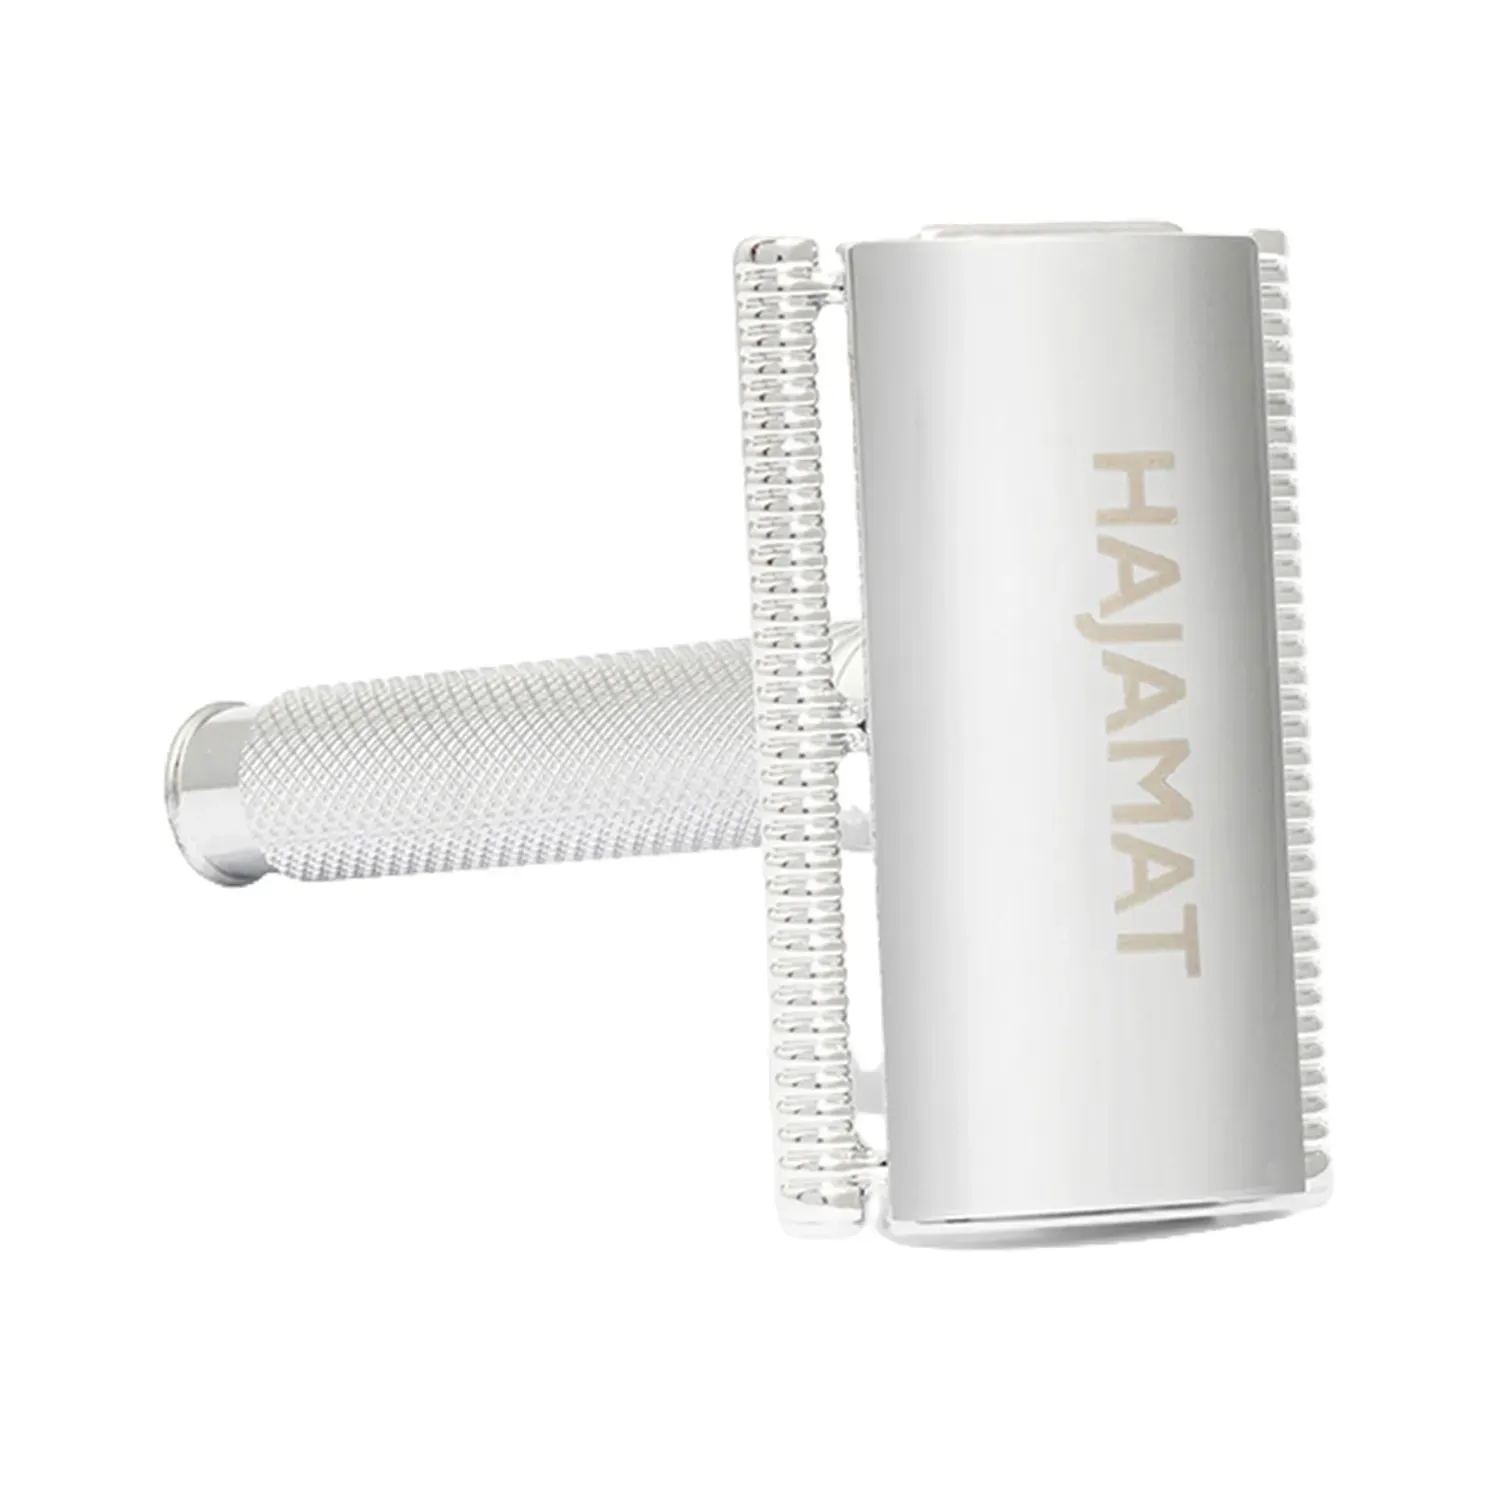 Hajamat | Hajamat Spade Double Edge Safety Razor, Stainless Steel 304, Chrome Finish